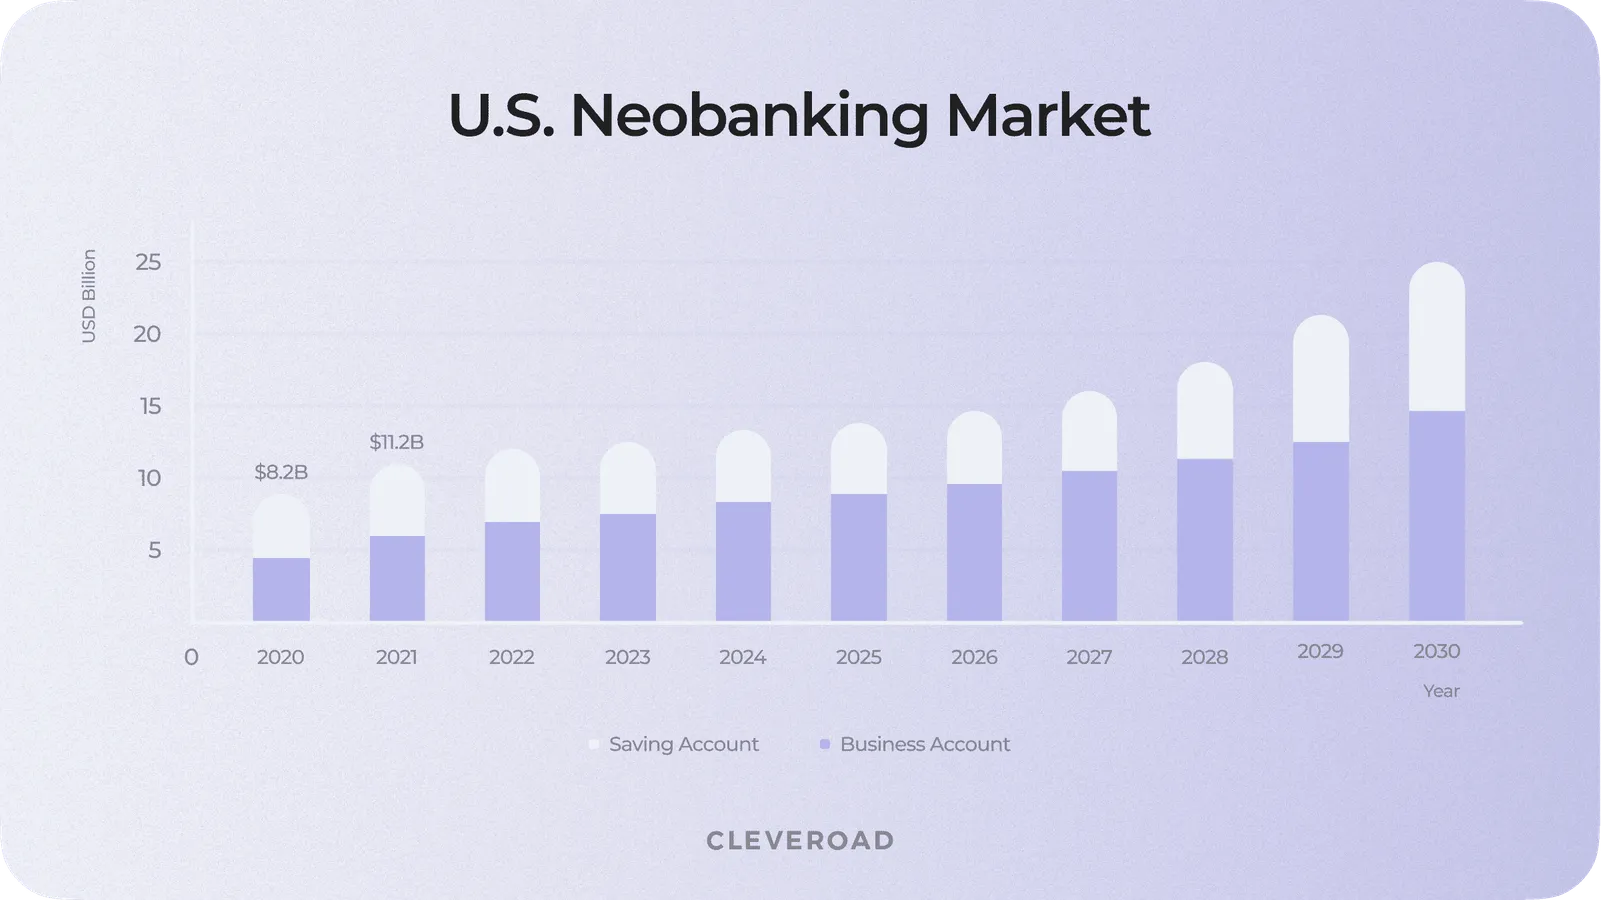 Neobanking market size growth